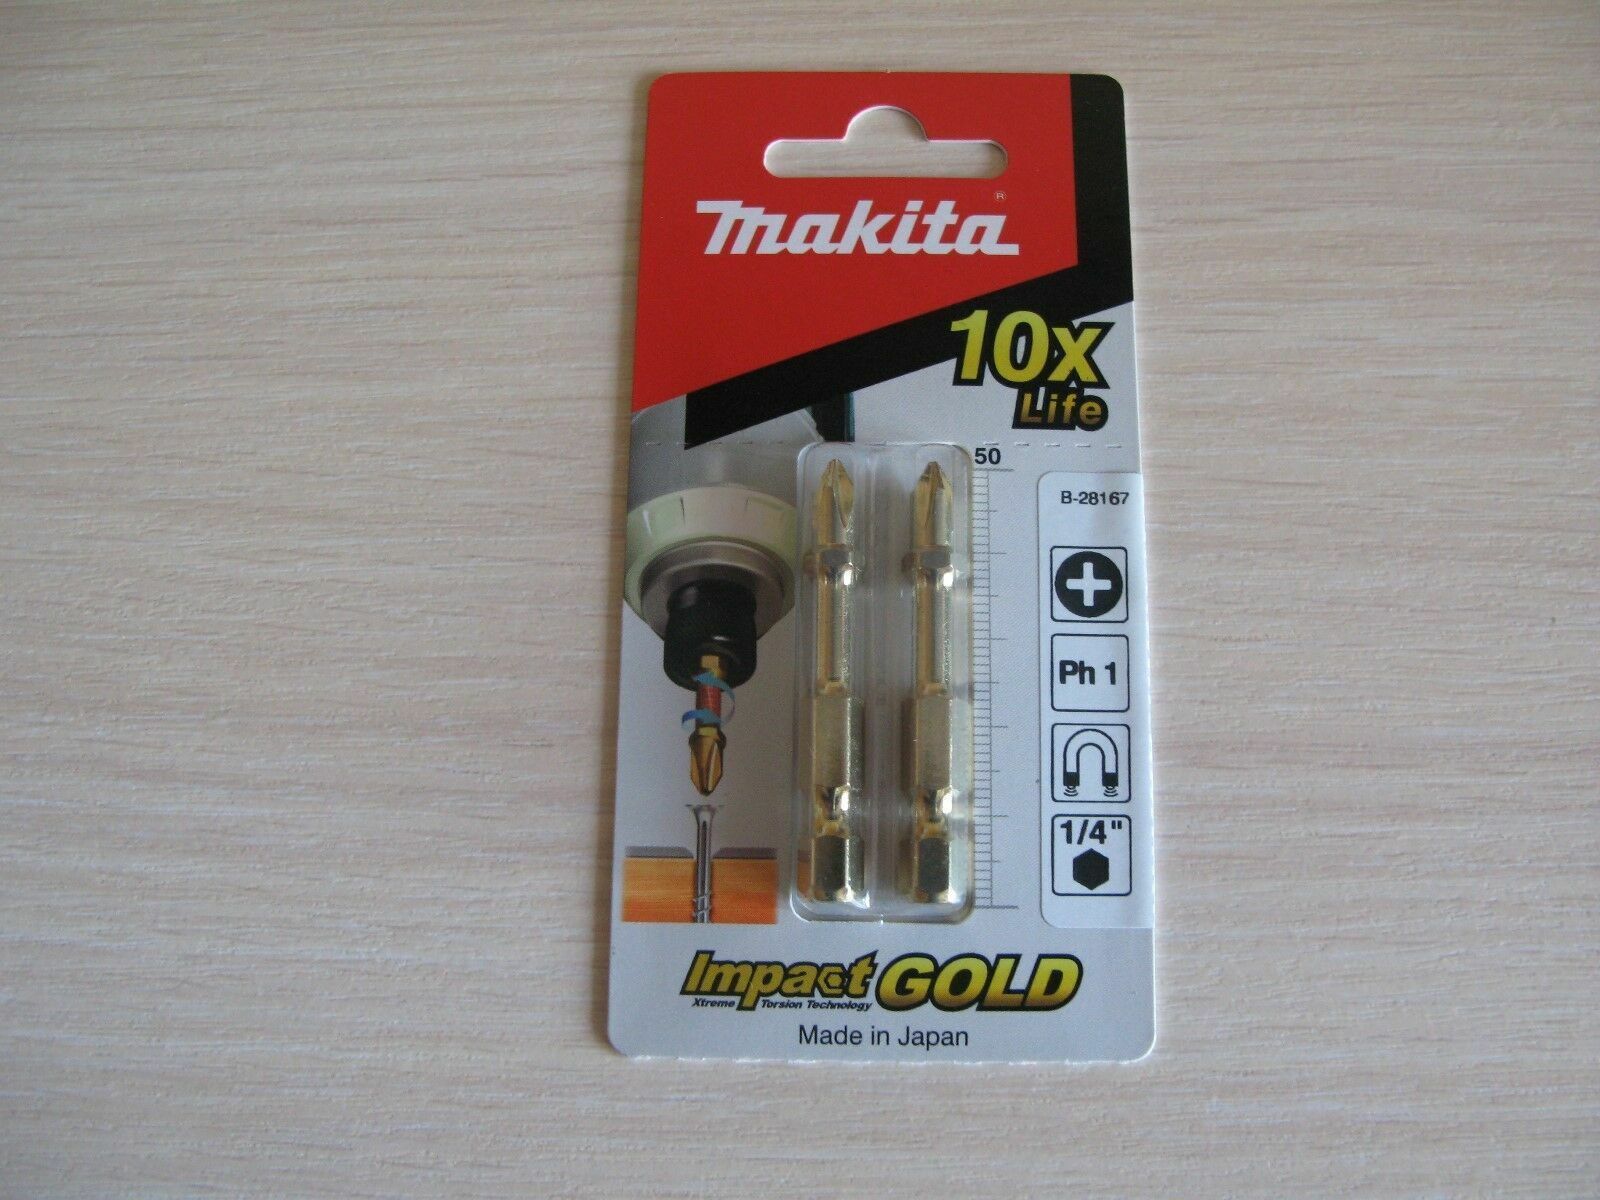 Makita B-28167 2psc Impact GOLD Torsion Bit PH1 50mm Screwdriver - $20.68